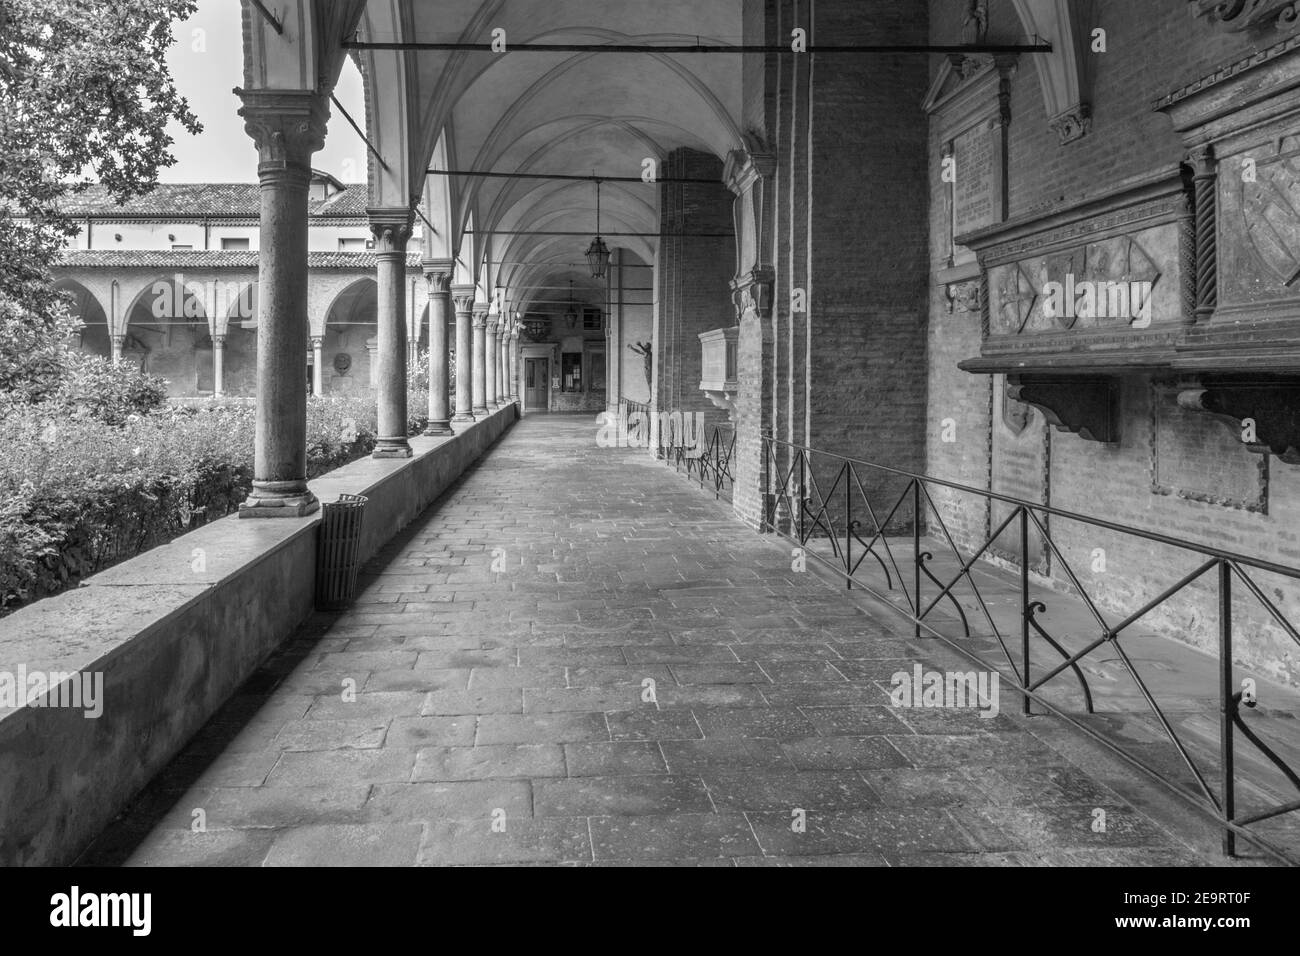 Padova Black and White Stock Photos & Images - Alamy